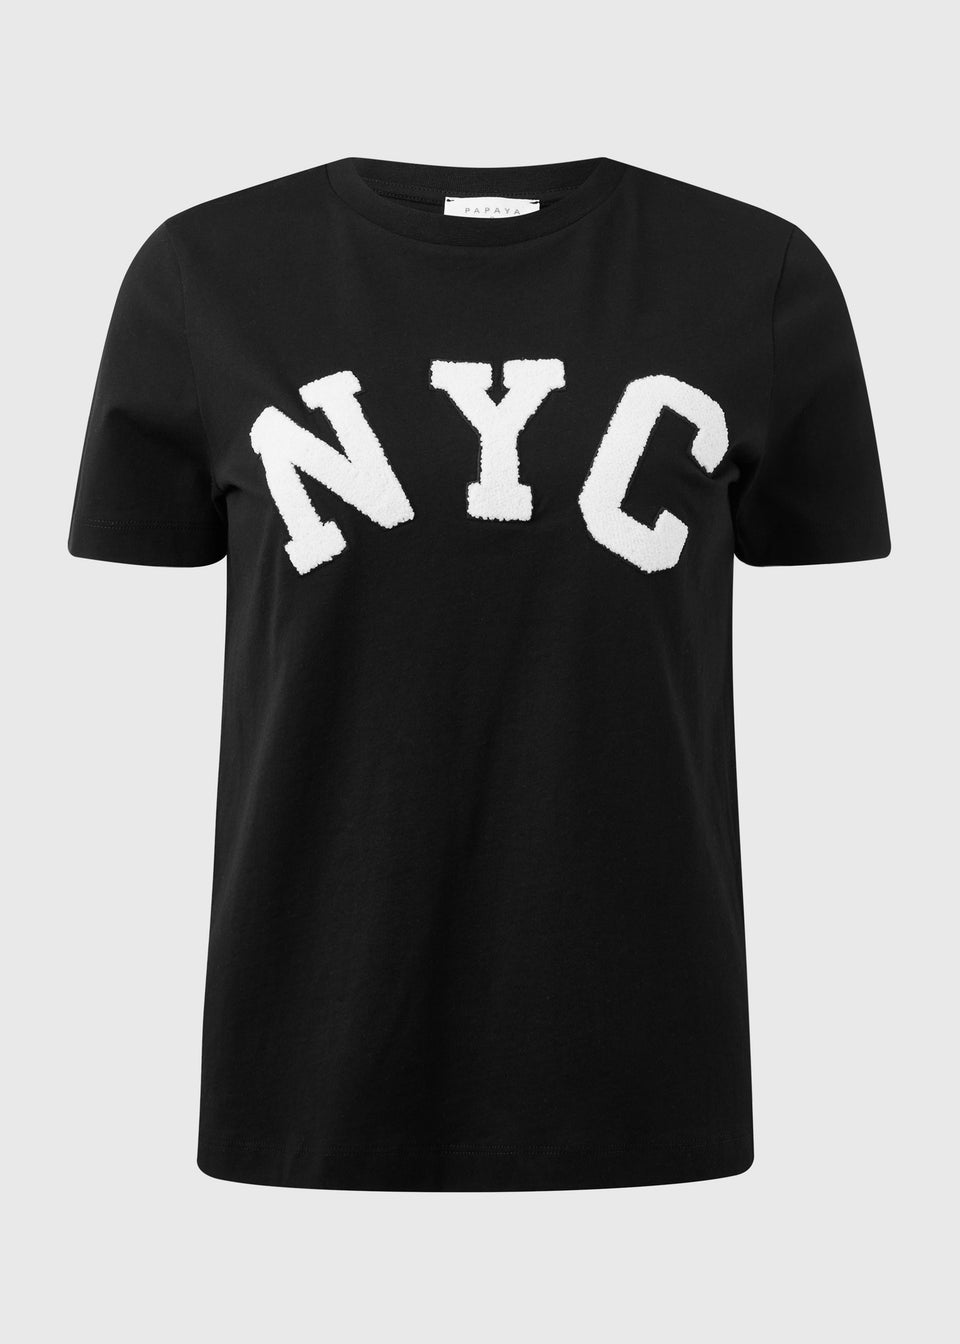 Black NYC Slogan T-Shirt